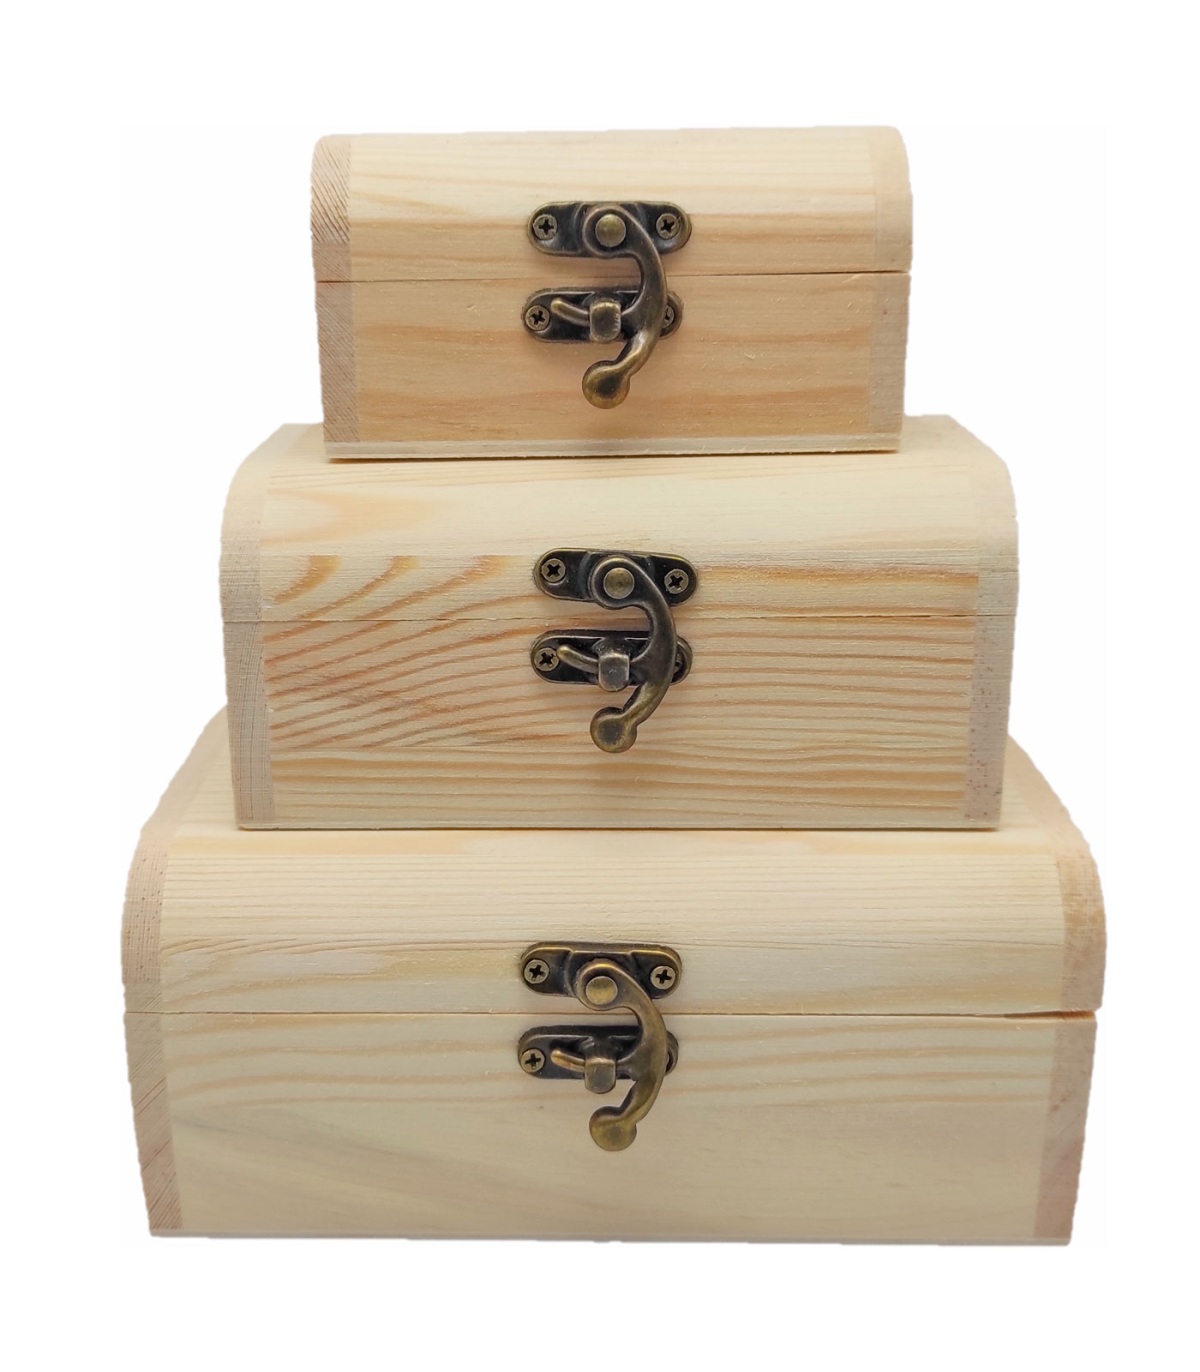 Tradineur - Caja con forma de baúl, madera natural, cierre metálico, tapa  redondeada, almacenaje joyas, manualidades, decoración